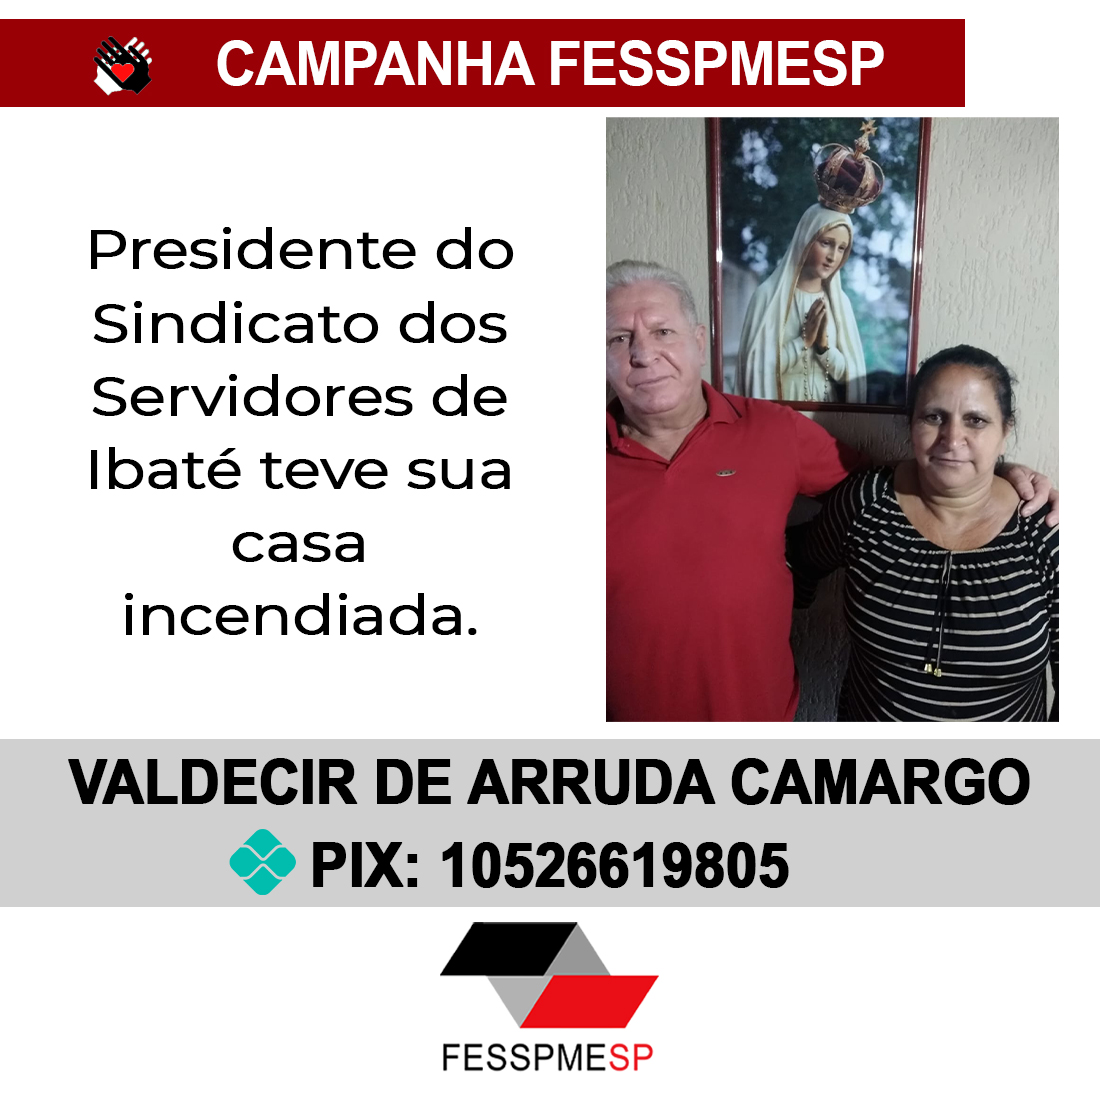 Campanha FESSPMESP: Valdecir de Arruda Camargo